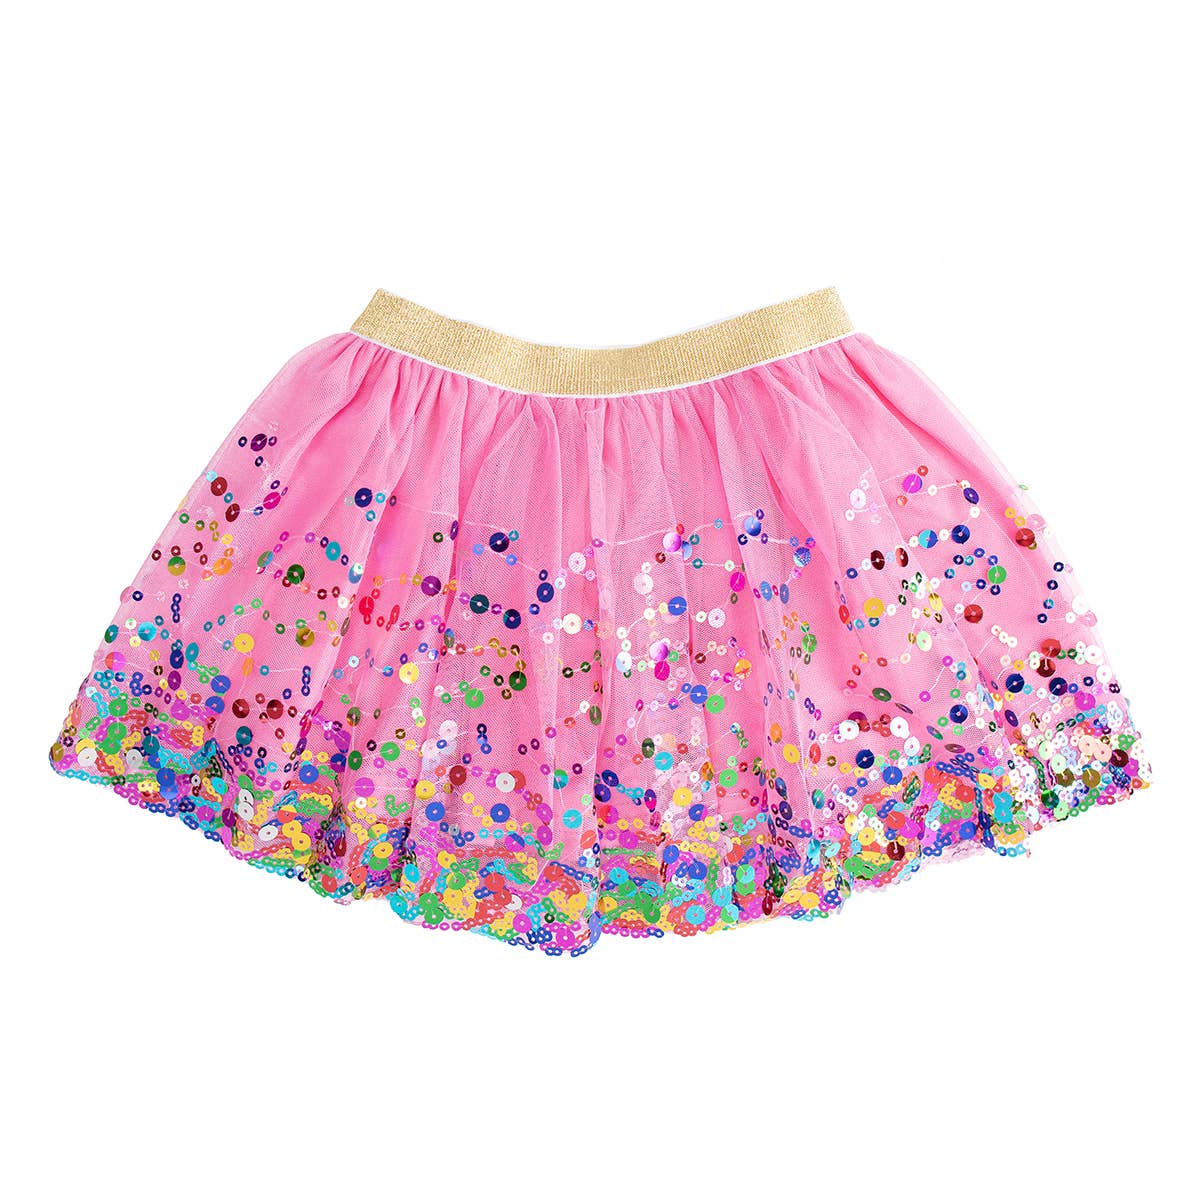 Raspberry Confetti Tutu - Dress Up Skirt